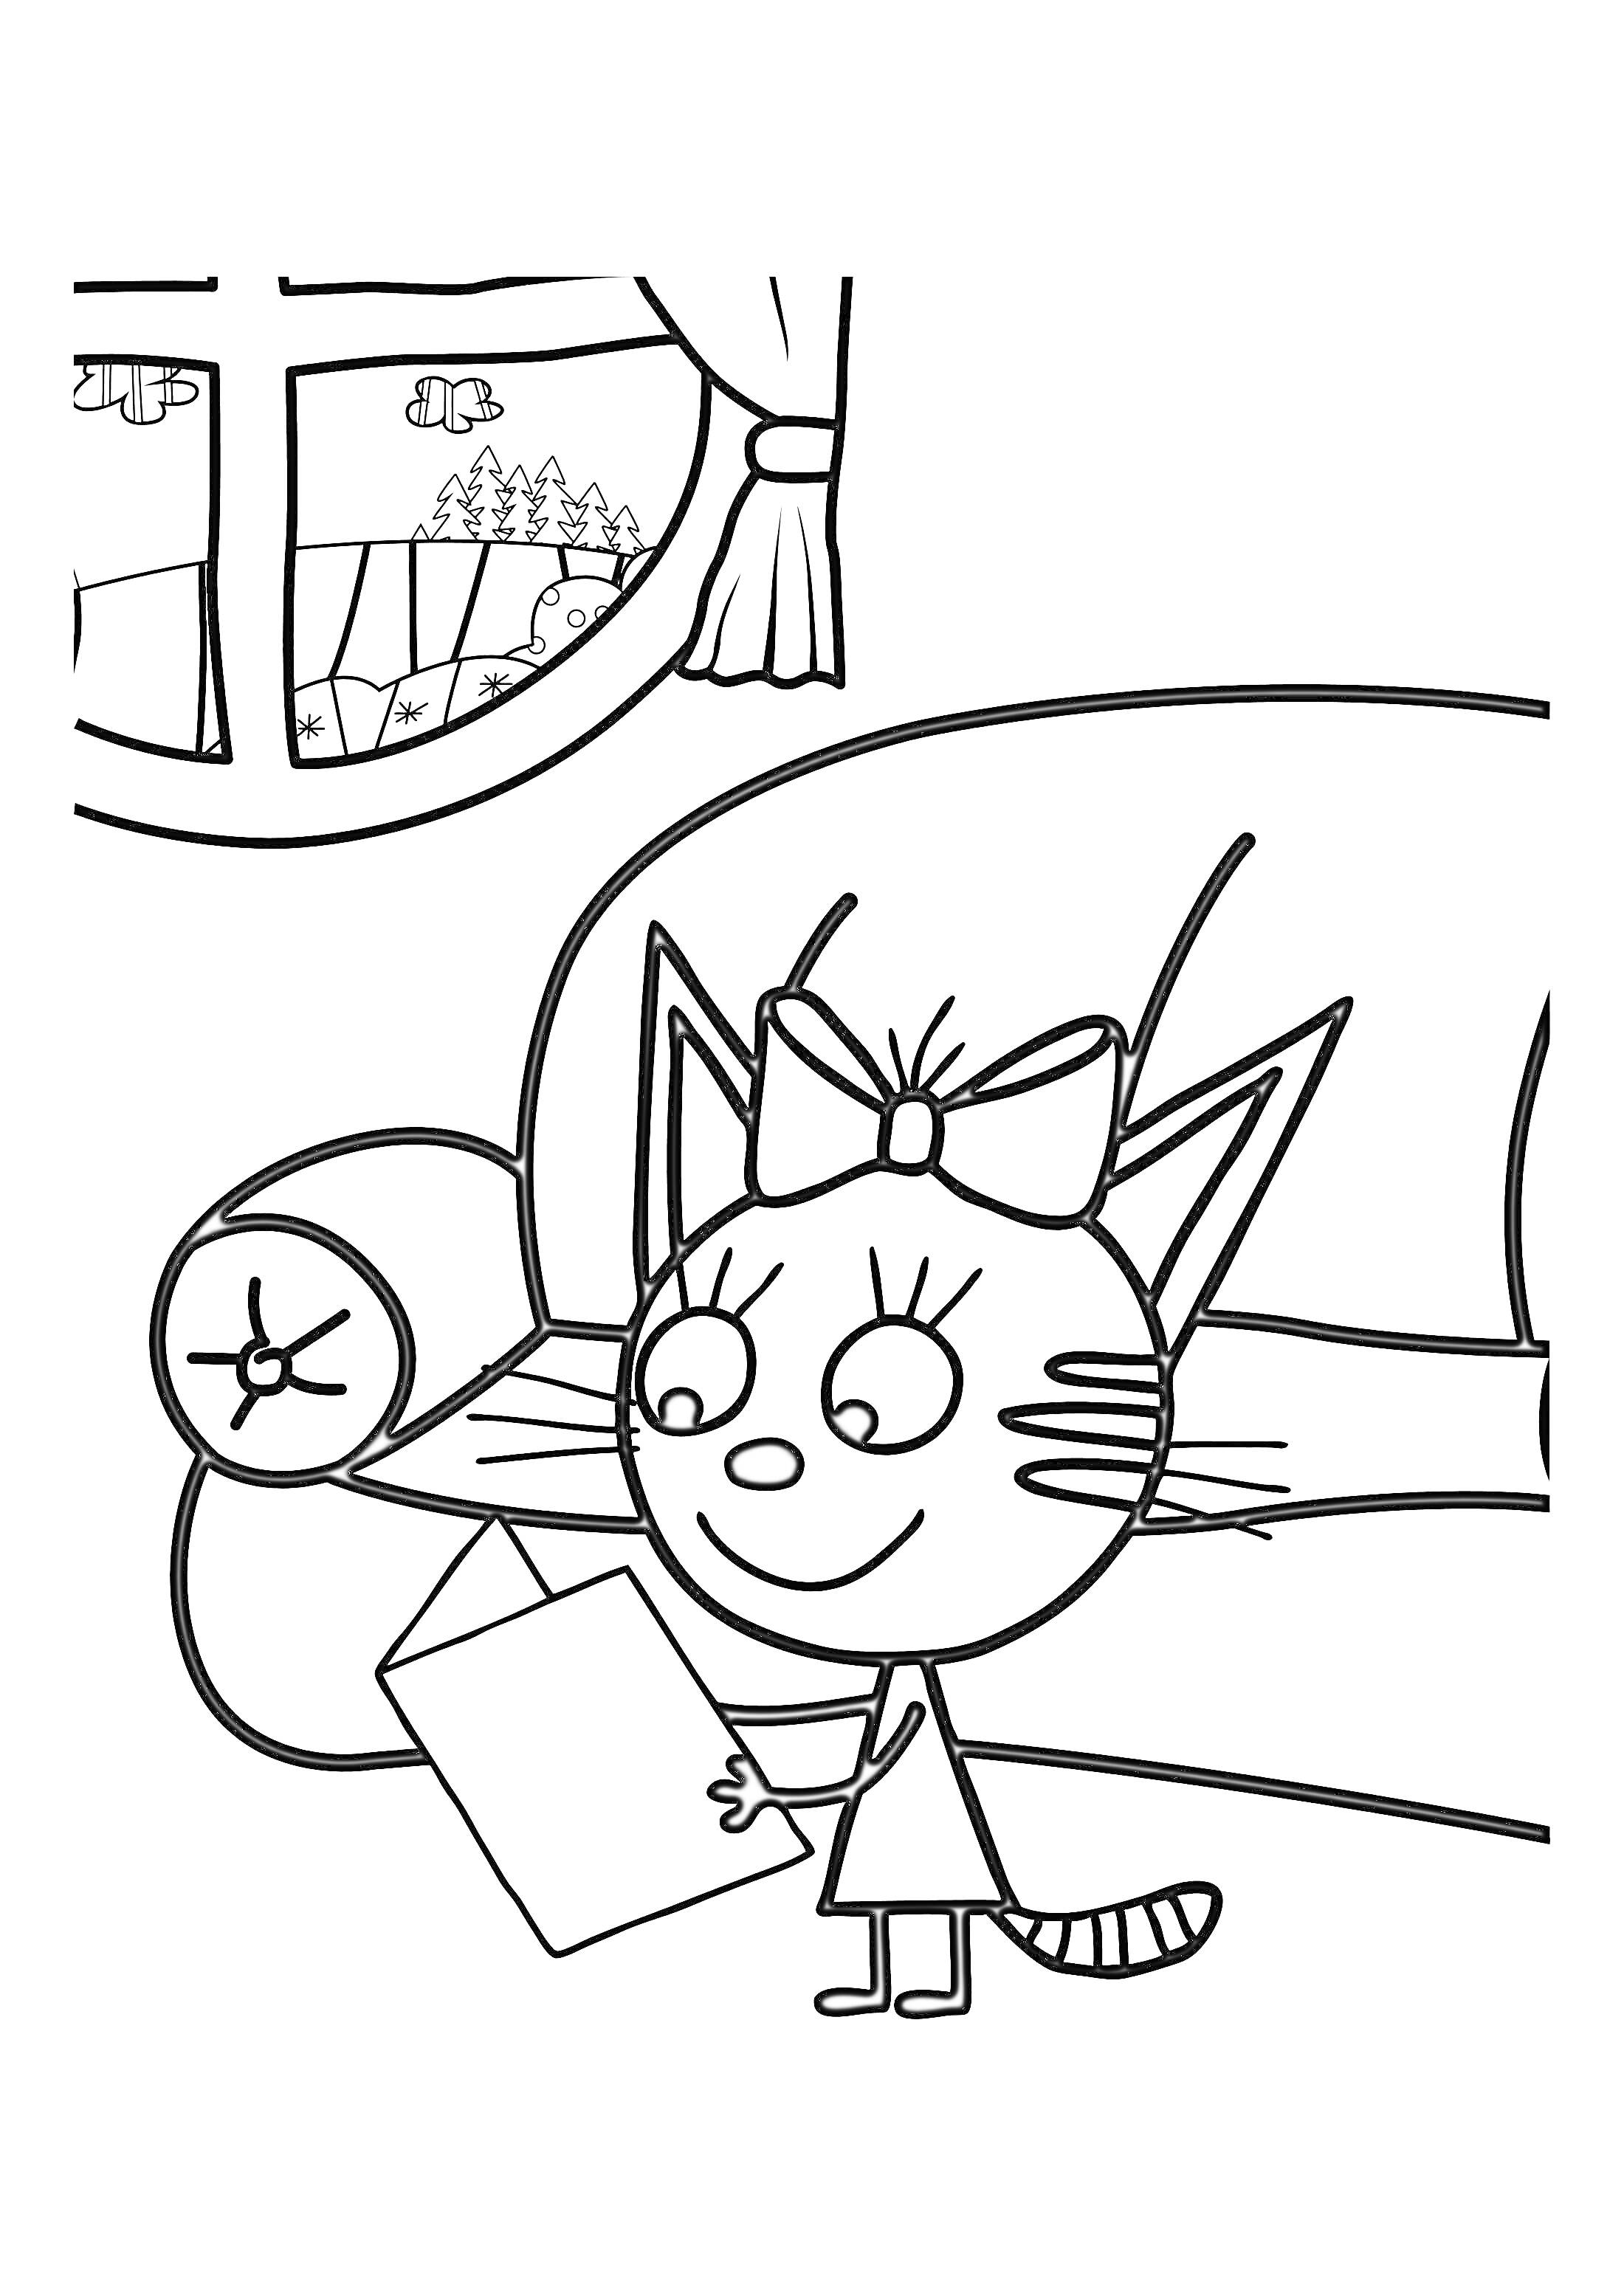 Котёнок с бантом на диване, в руках лист бумаги, окно с видом на природу